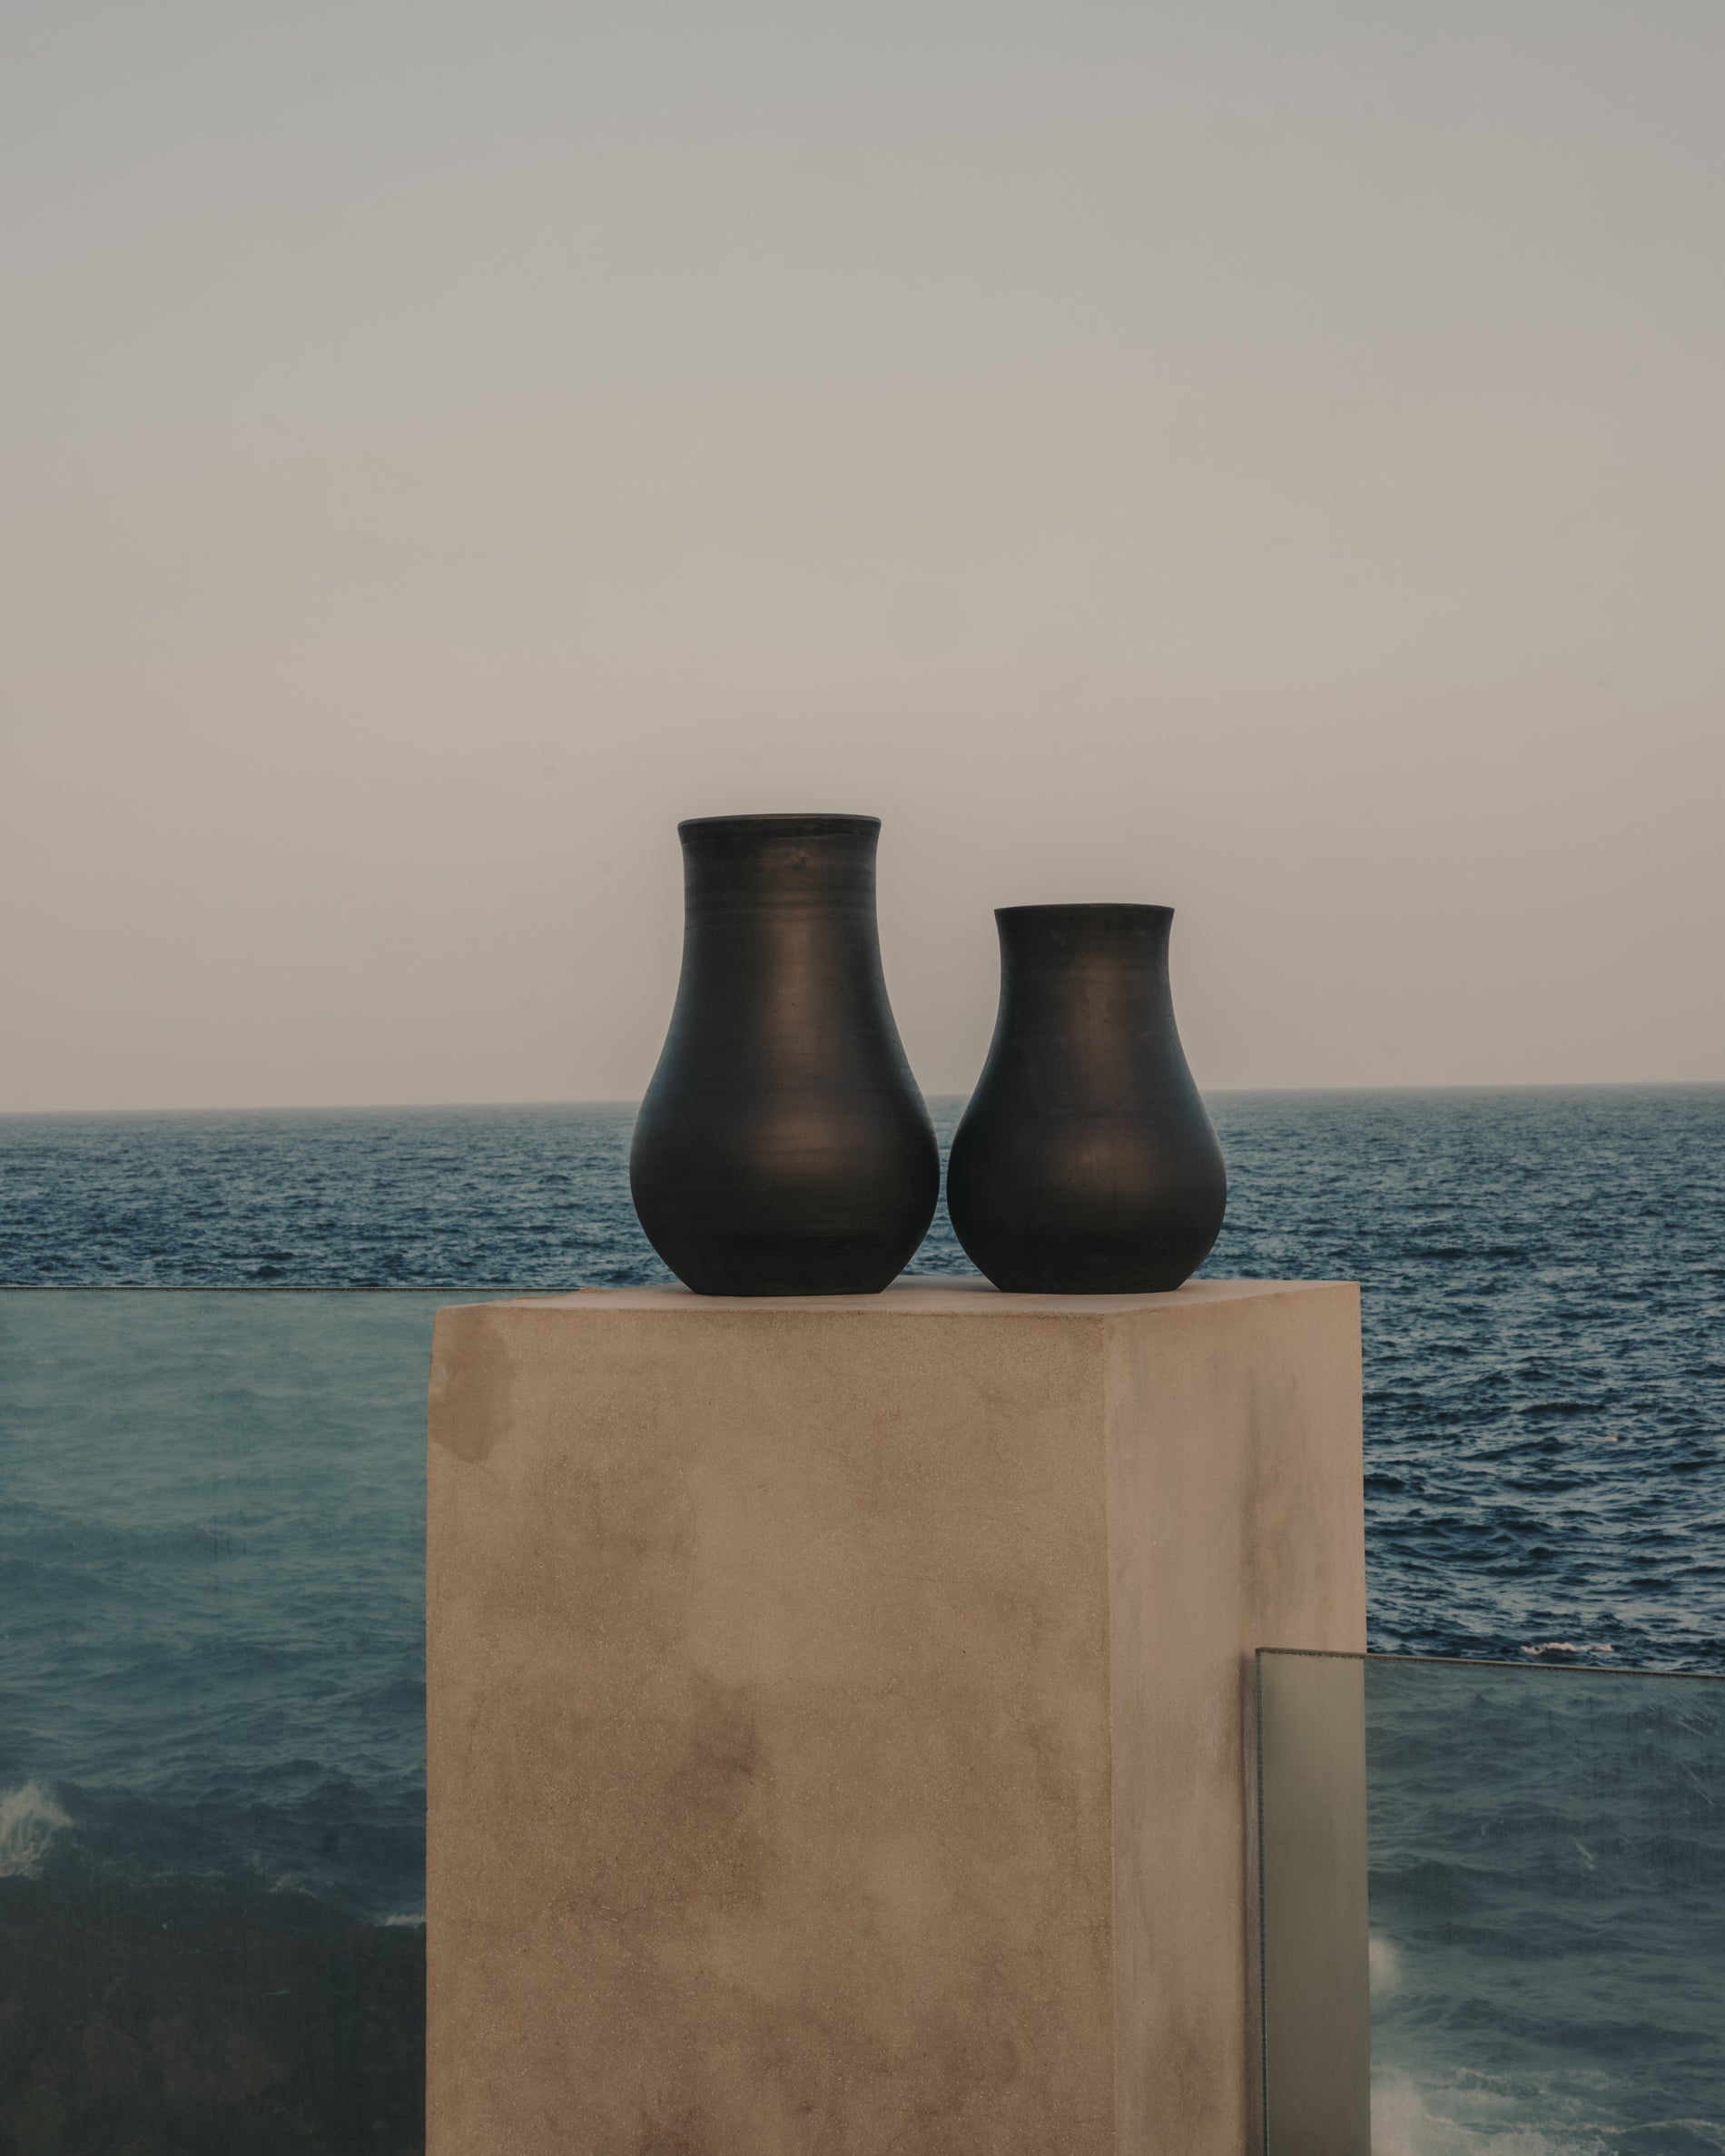 Silaia terracotta vase with black finish 30 cm